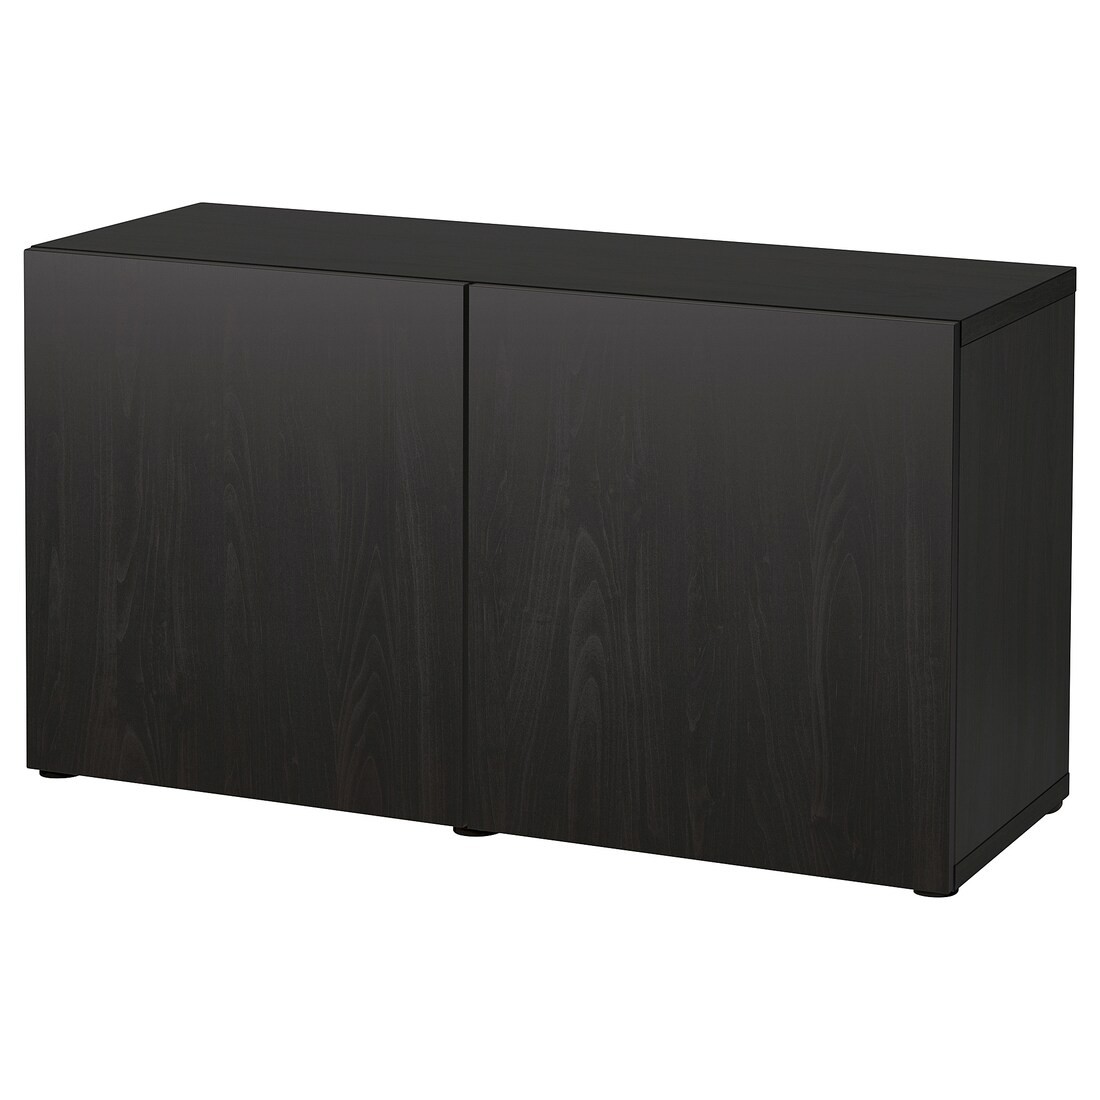 IKEA BESTÅ БЕСТО Комбинация для хранения с дверцами, черно-коричневый / Lappviken черно-коричневый, 120x42x65 см 59324540 593.245.40